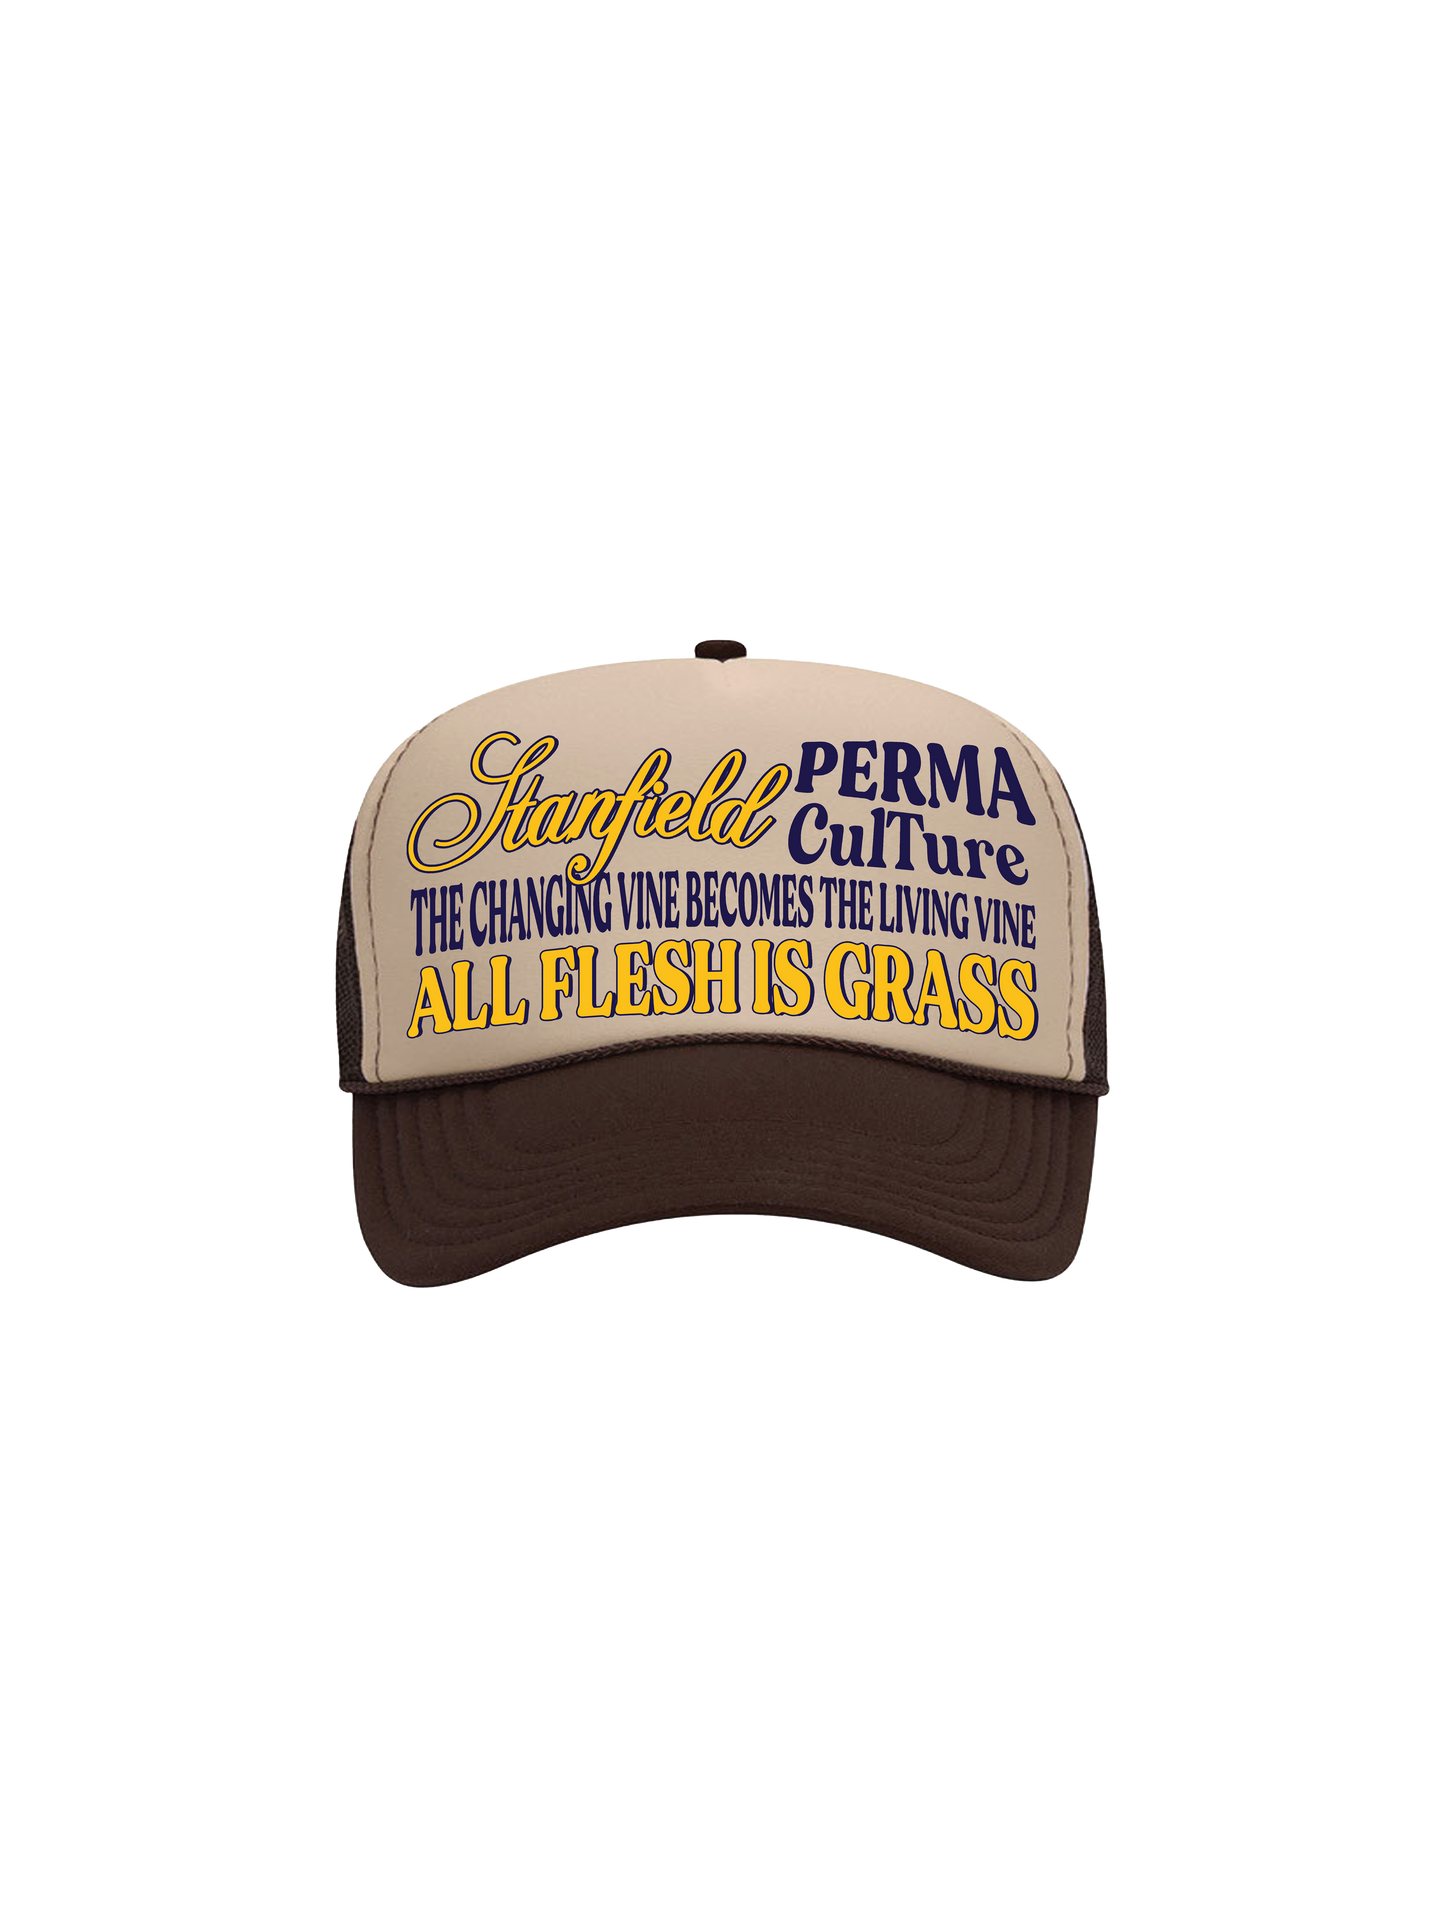 Permaculture Trucker Hat